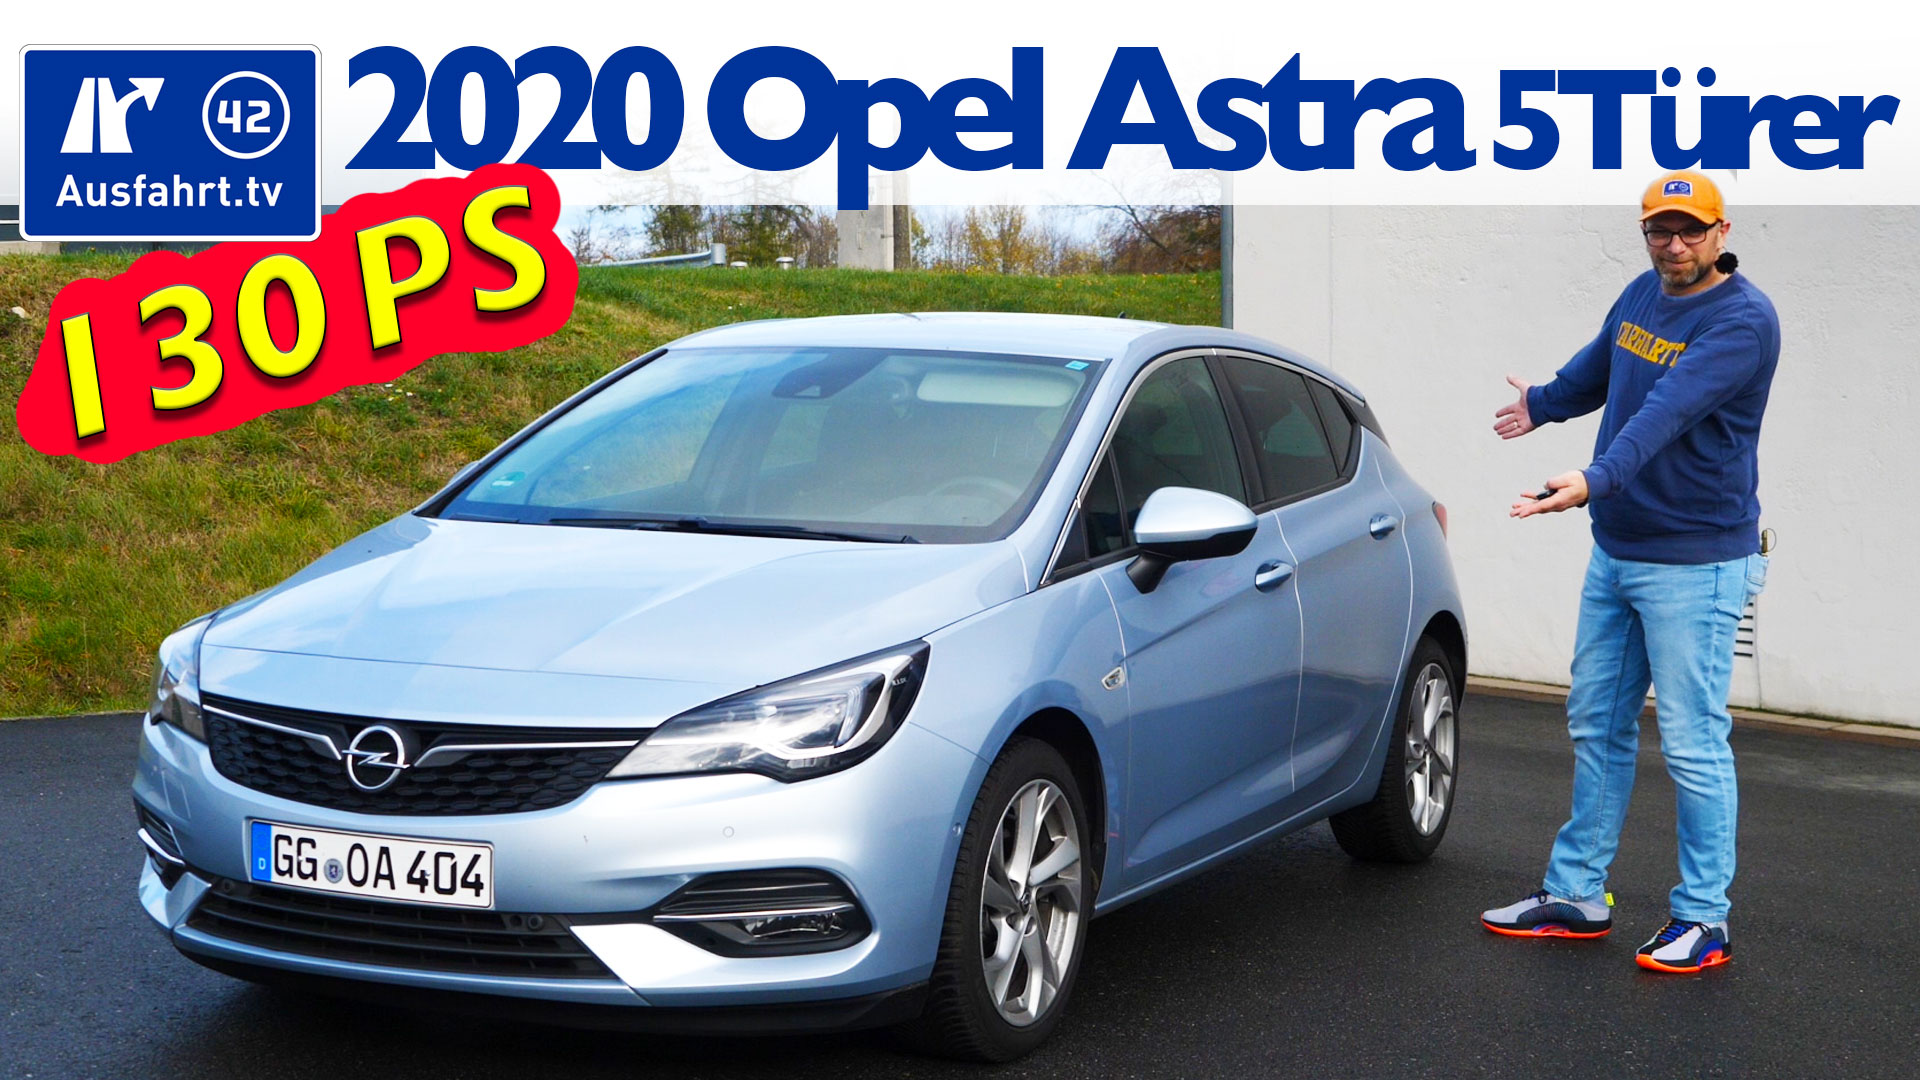 18 Opel Astra 1 6 Cdti 110 Ps Innovation Ausfahrt Tv